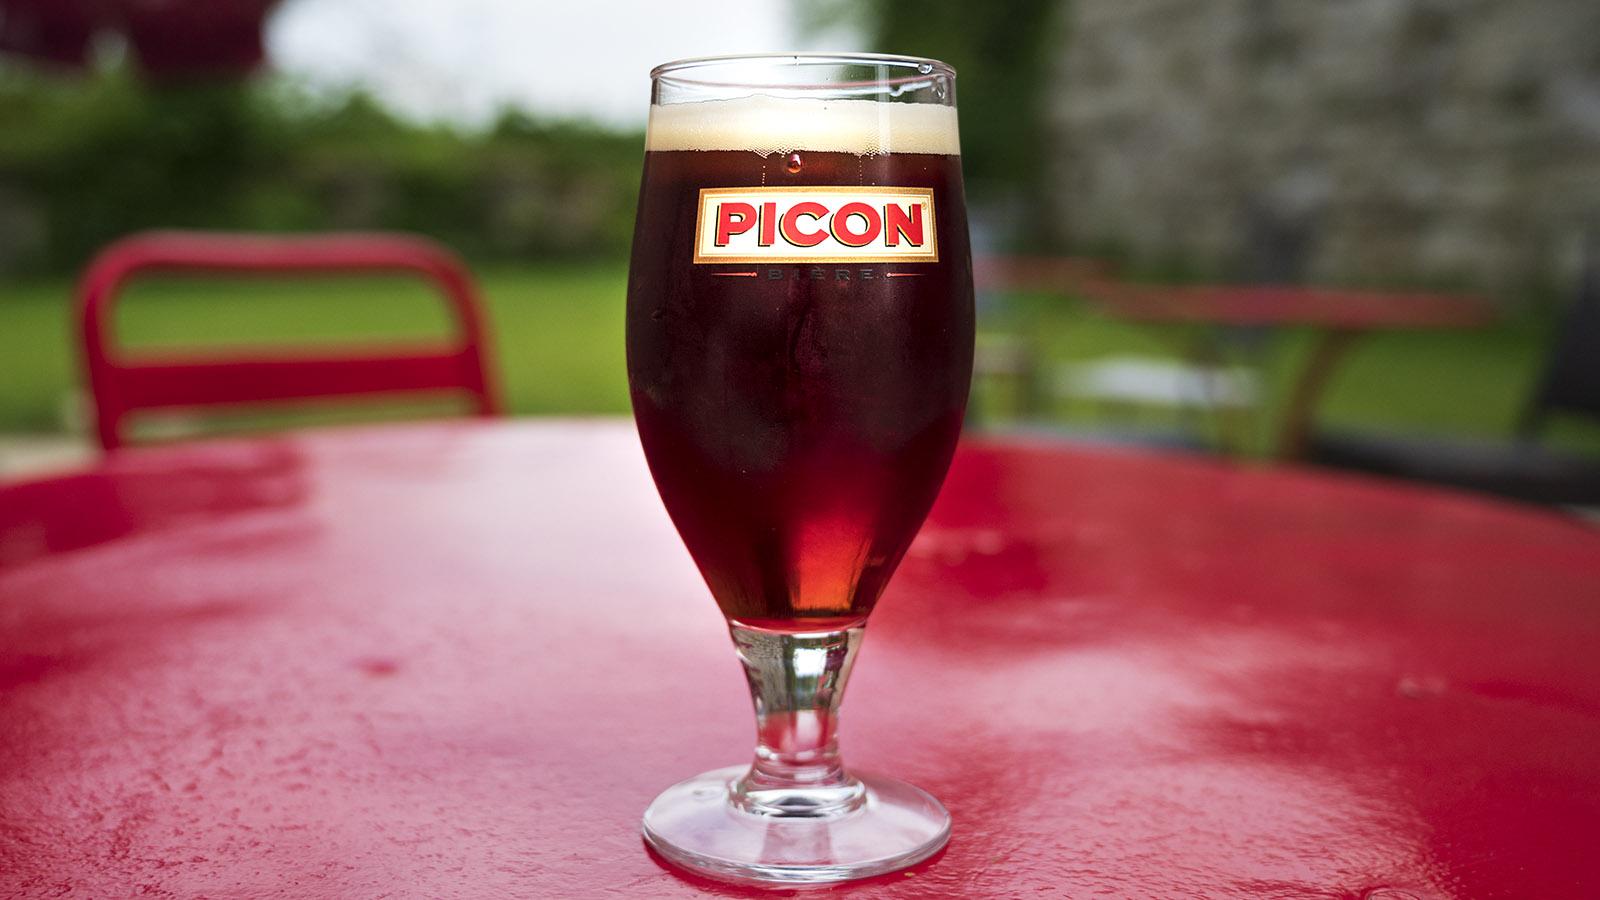 Picon-Bier. Foto: Hilke Maunder